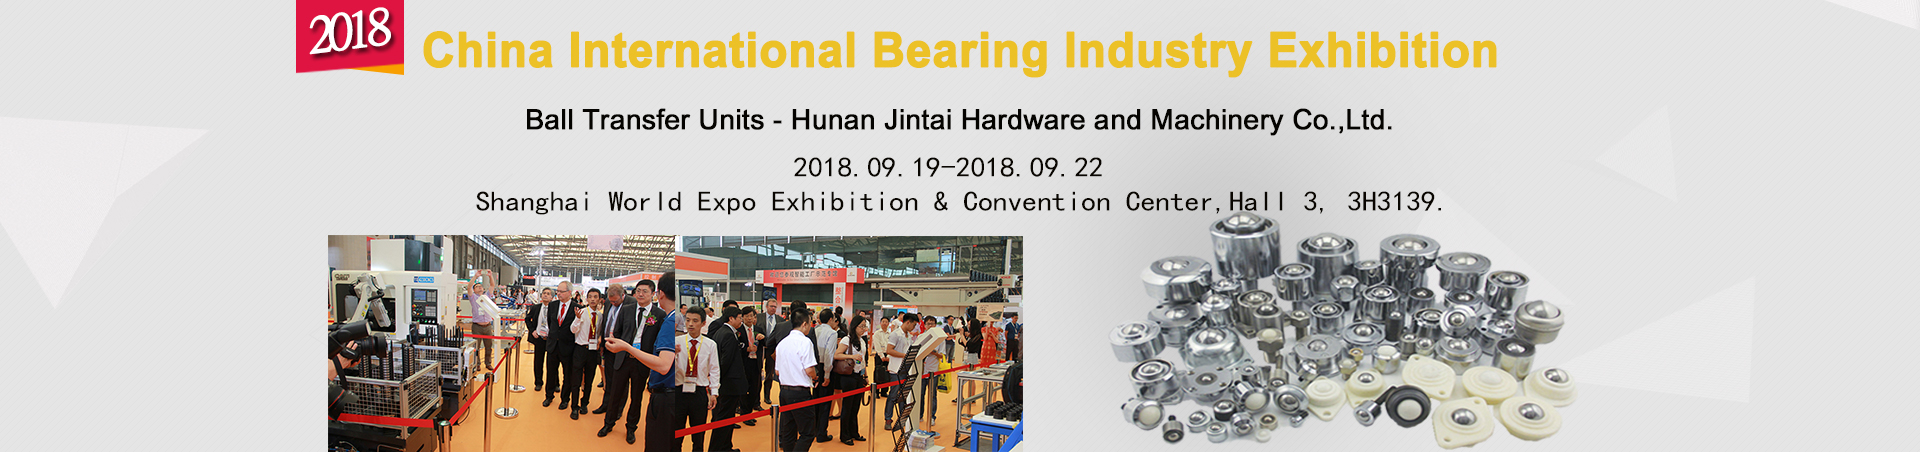 2018 China International Bearing Industry Exhibition